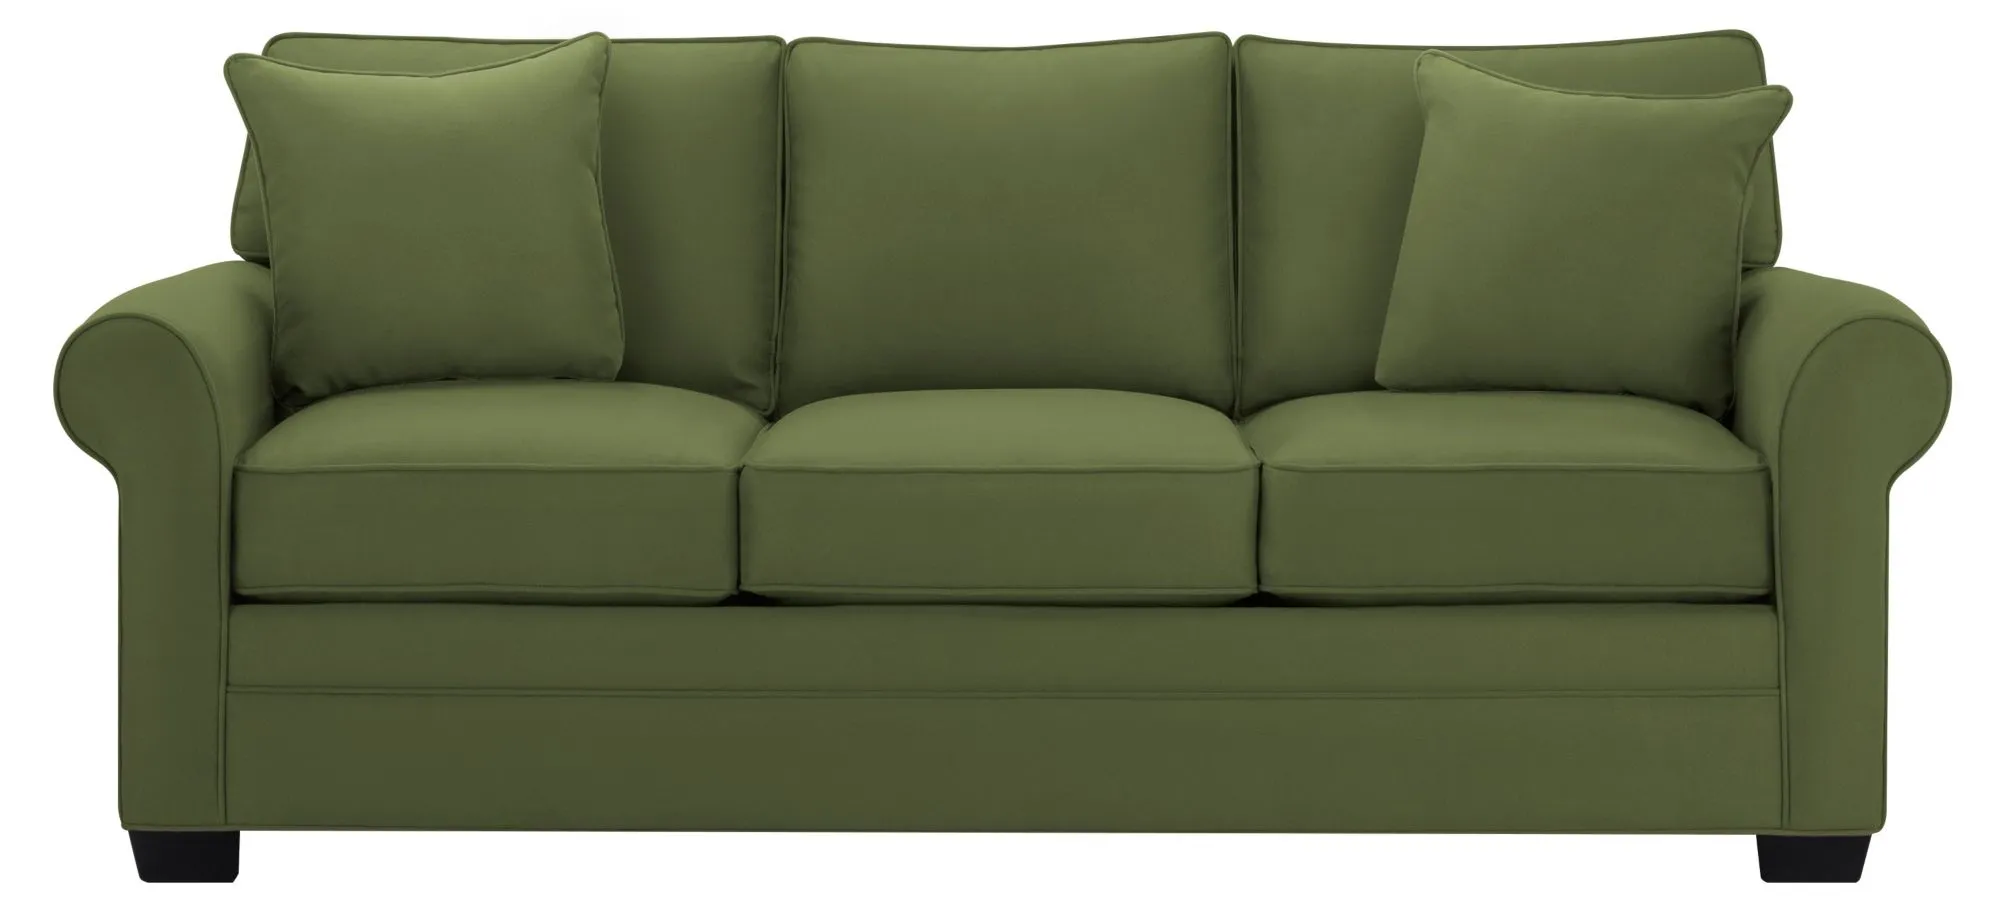 Glendora Queen Sleeper Sofa in Suede So Soft Pine by H.M. Richards